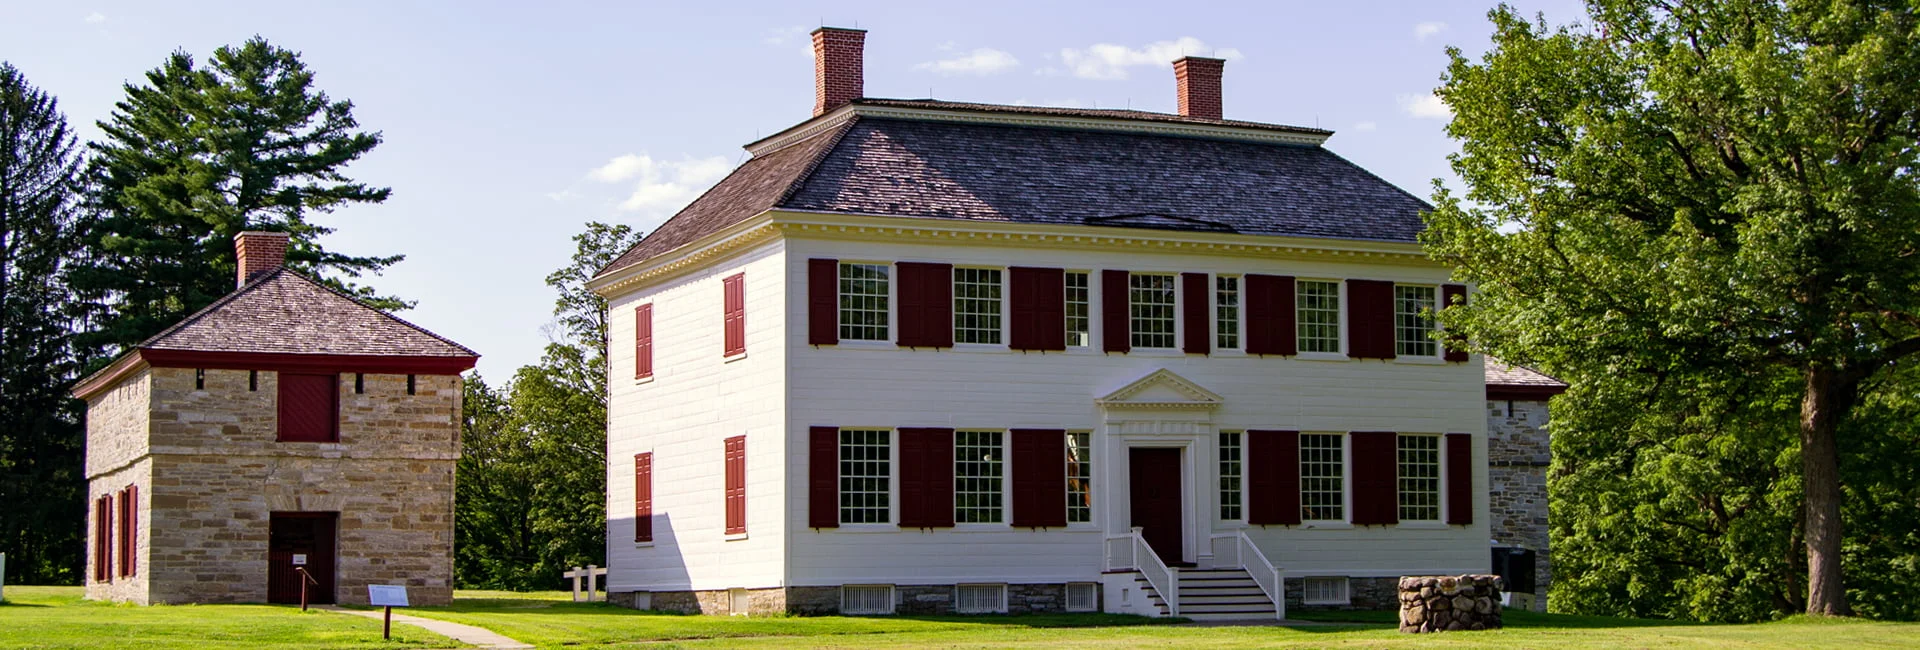 AFrey_Capital-Saratoga Region - Johnson Hall State Historic Site, Main house and servant's quarters